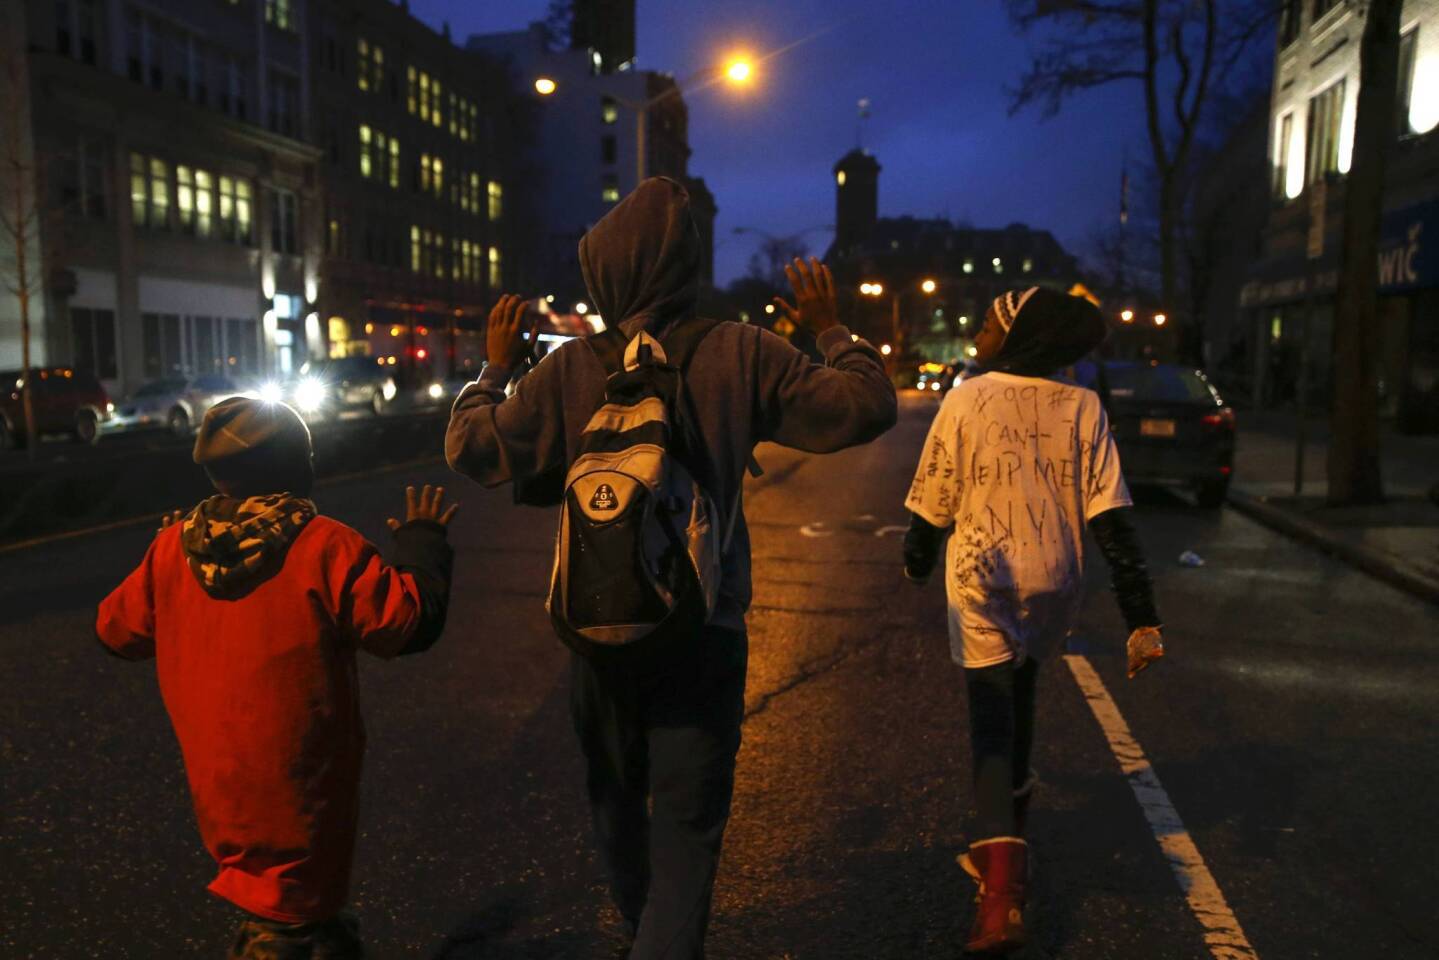 Eric Garner protests in New York City